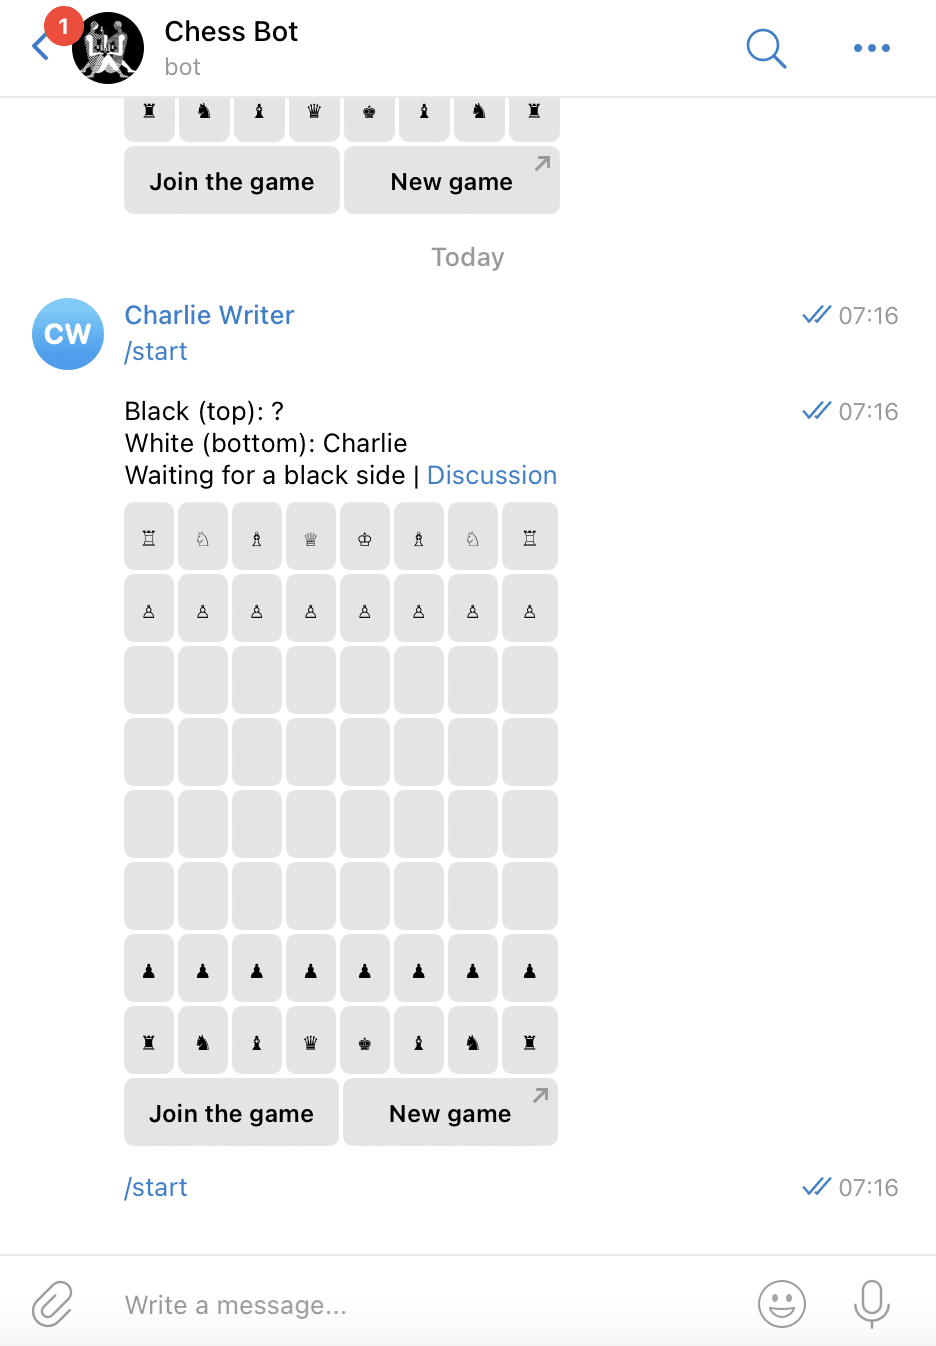 Chess Bot Telegram Bot